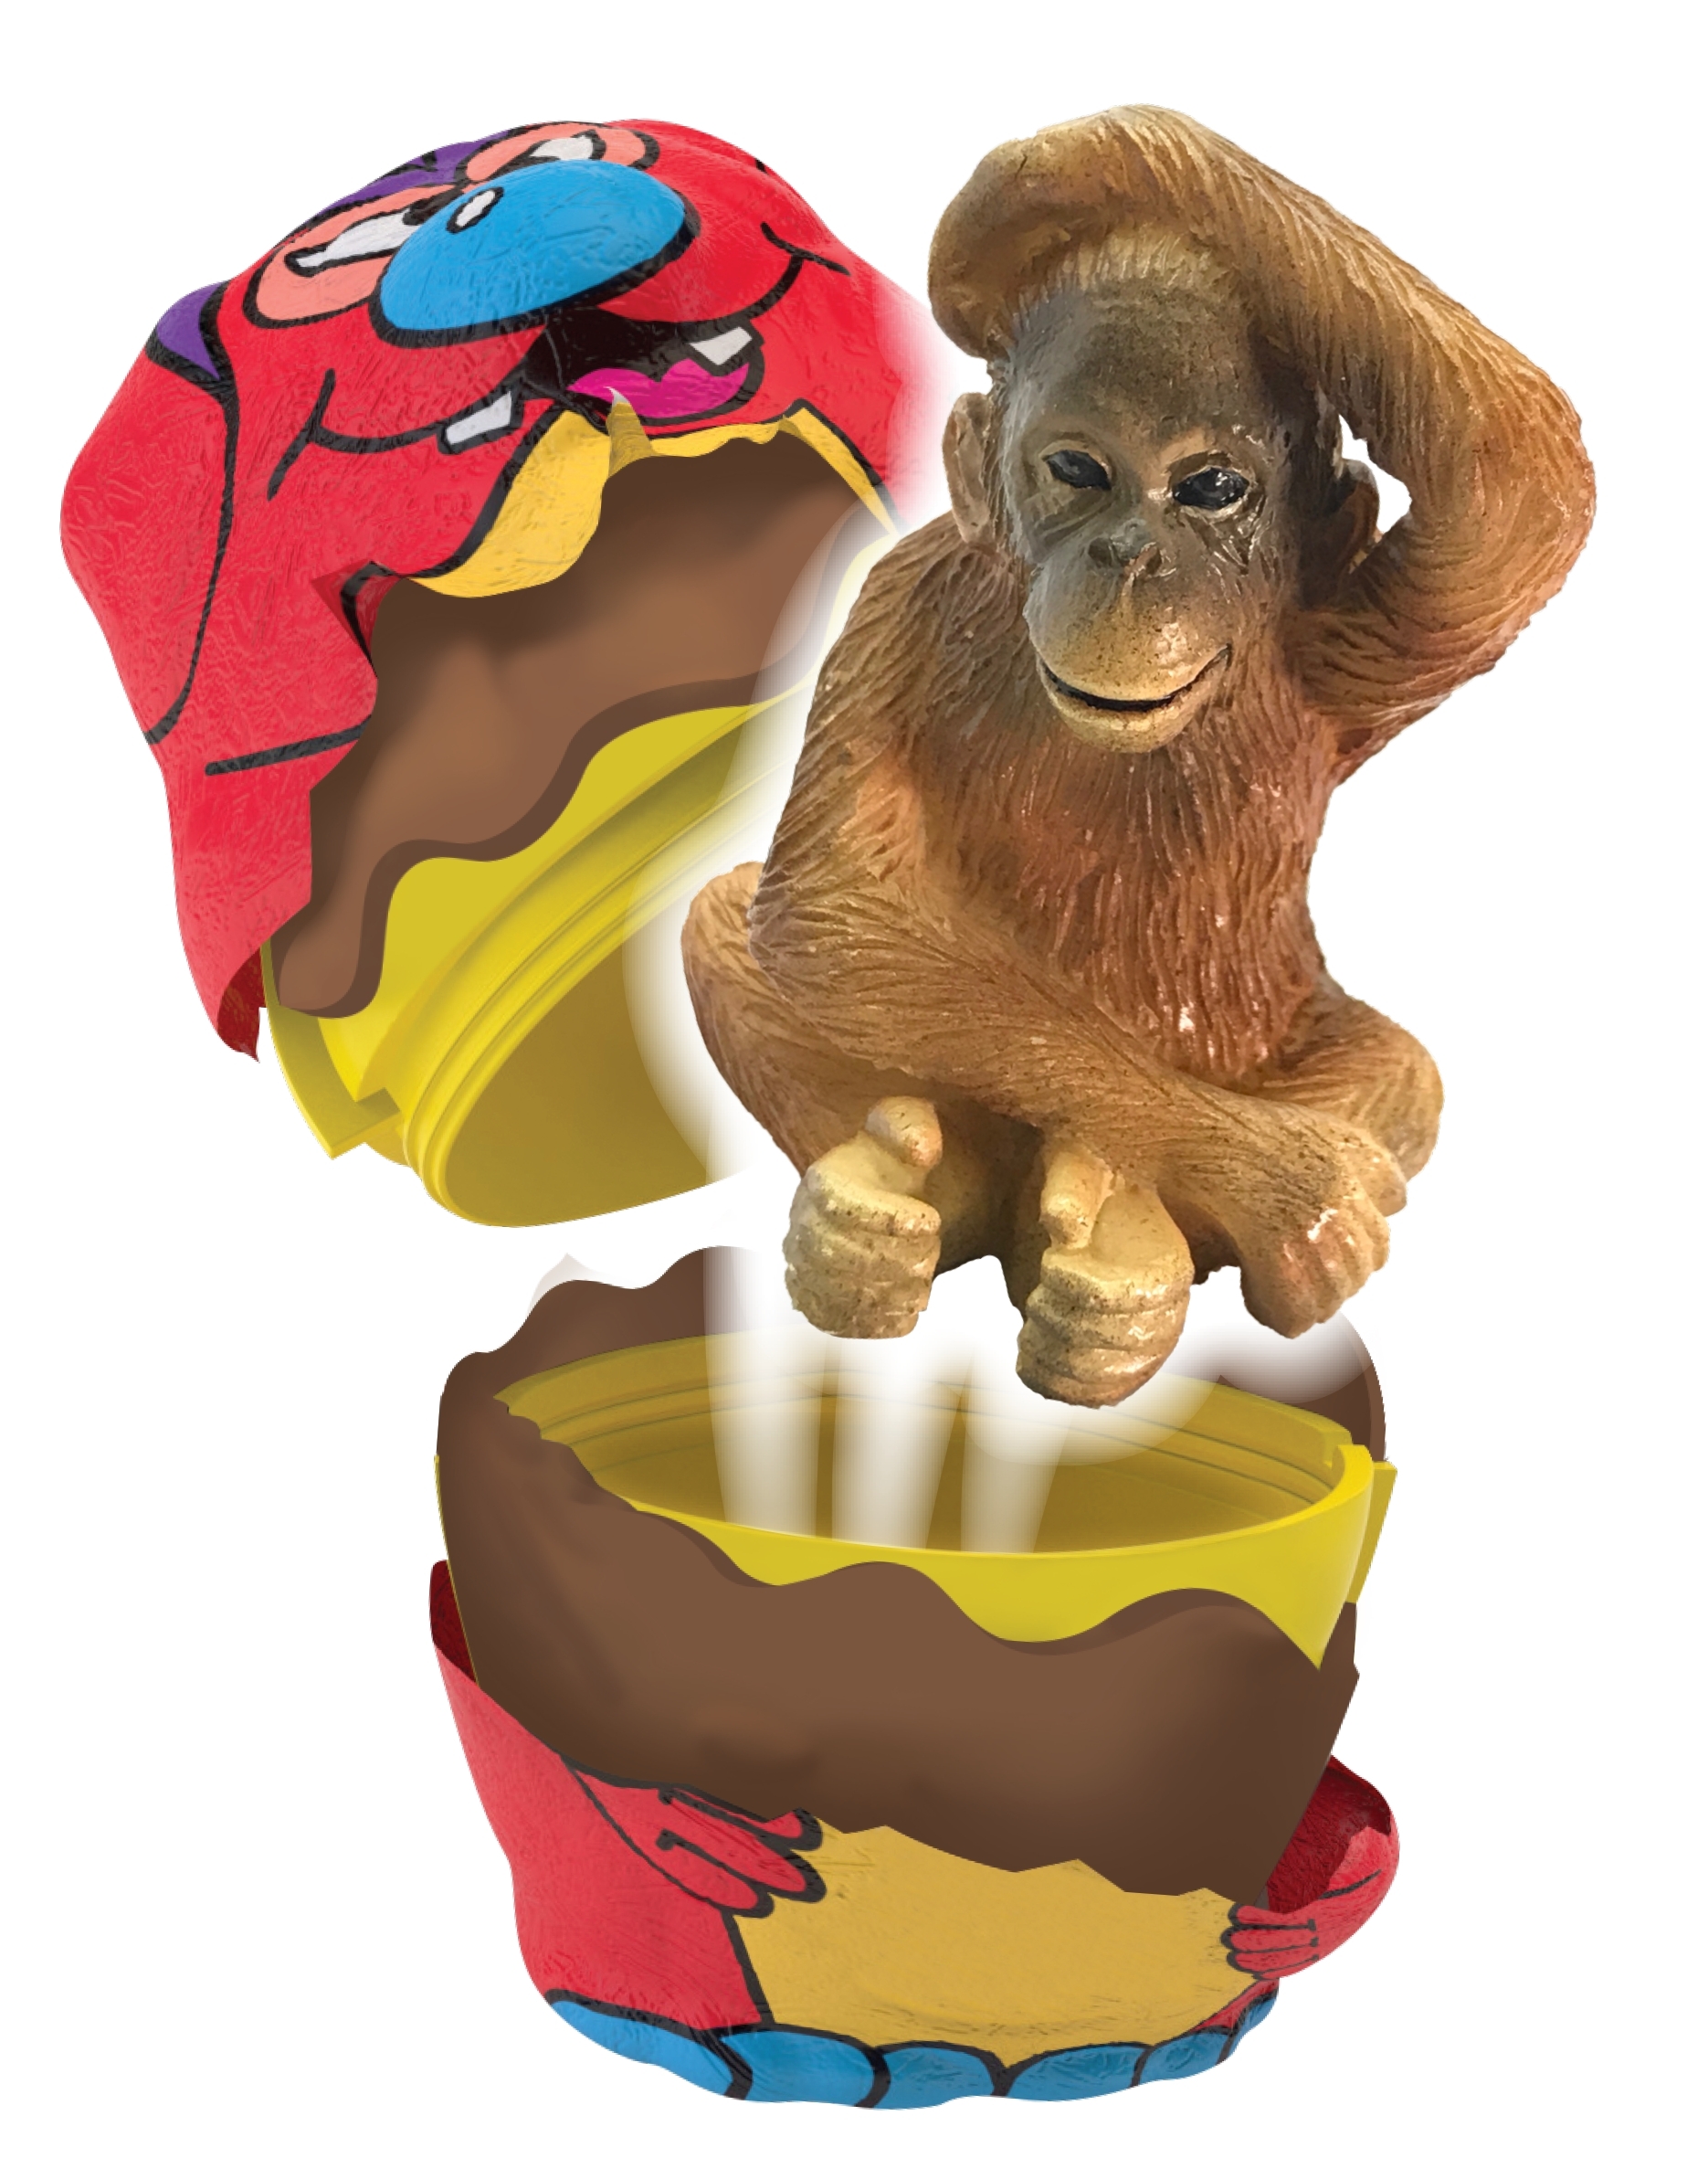 /"NEW/" 2018  Series 4 Yowie Collectible Kipunji Monkey